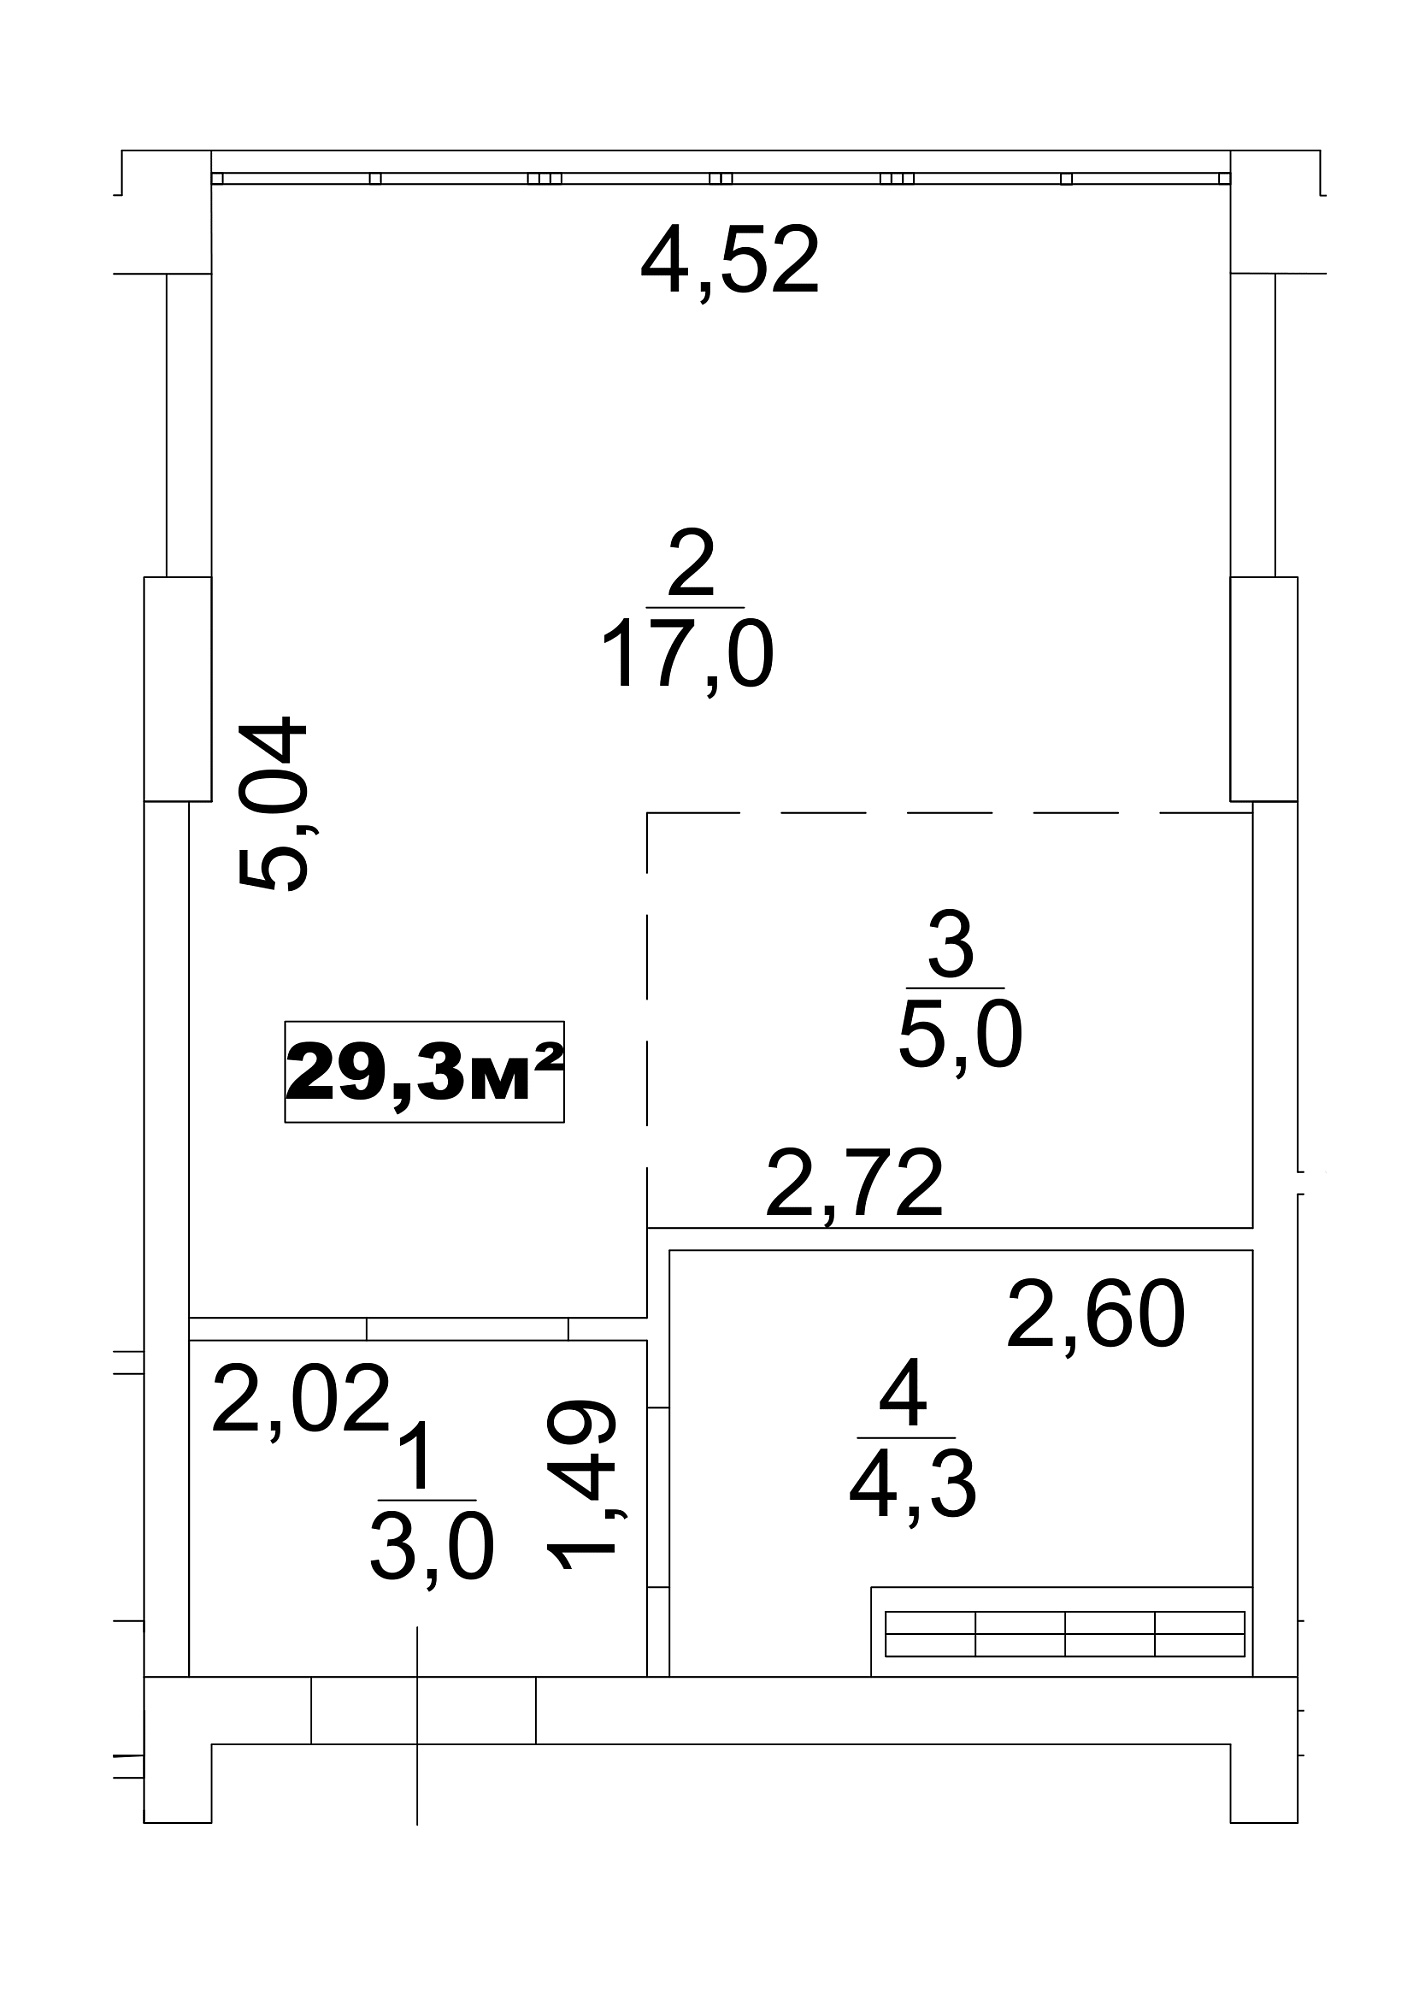 Planning Smart flats area 29.3m2, AB-13-07/00056.